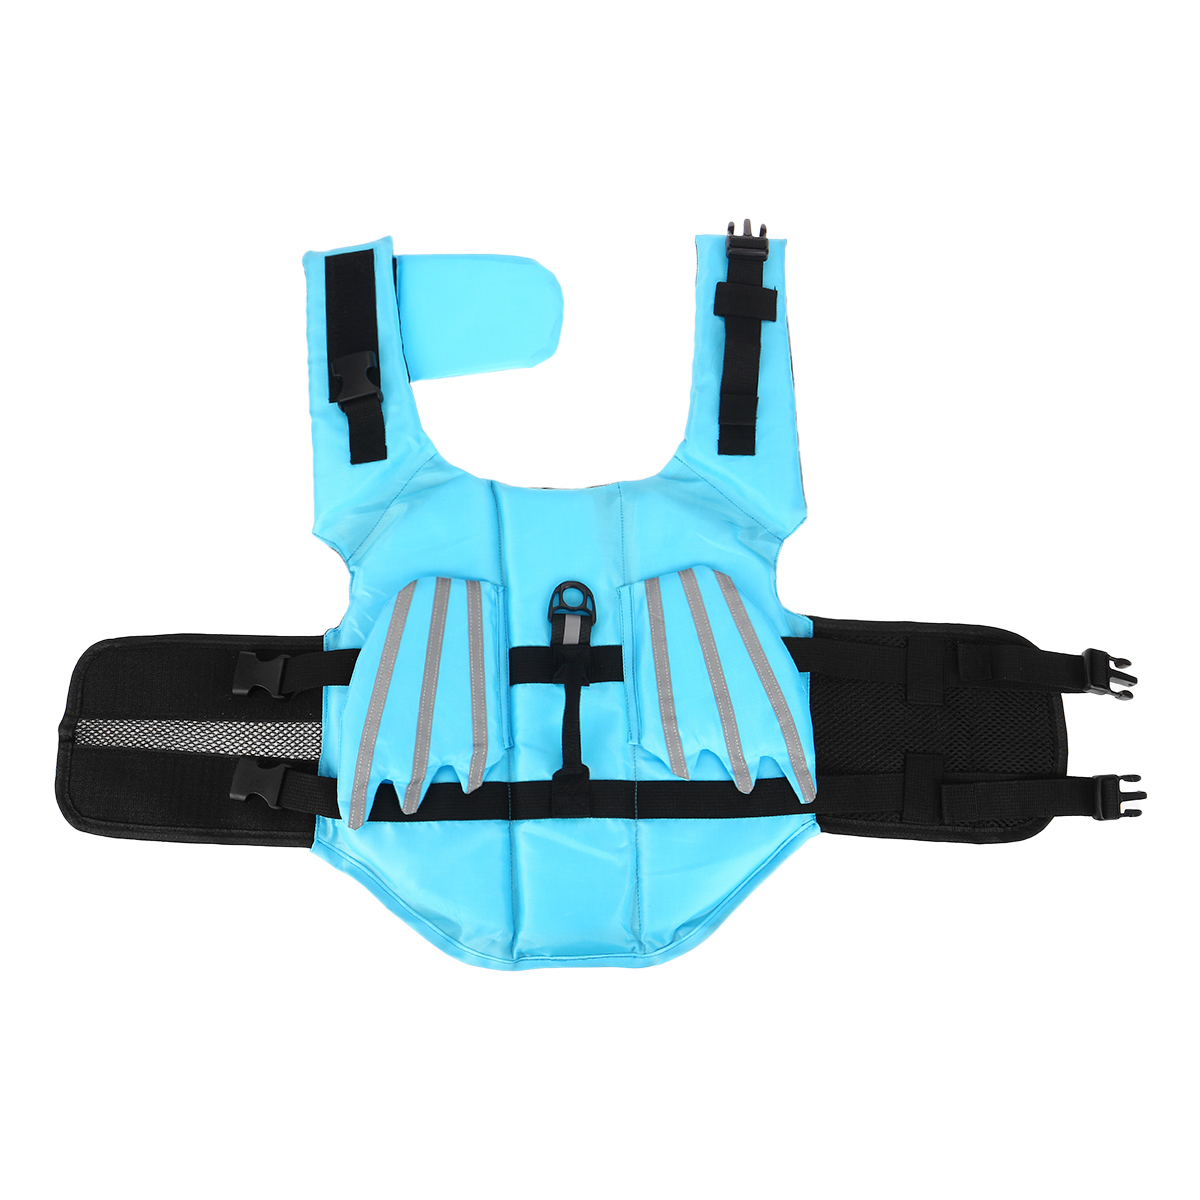 Dog-Life-Jacket-Pet-Safety-Life-Vests-Buoyancy-Aid-Float-Reflective-Swimming-Safety-Dog-Vest-1724851-6